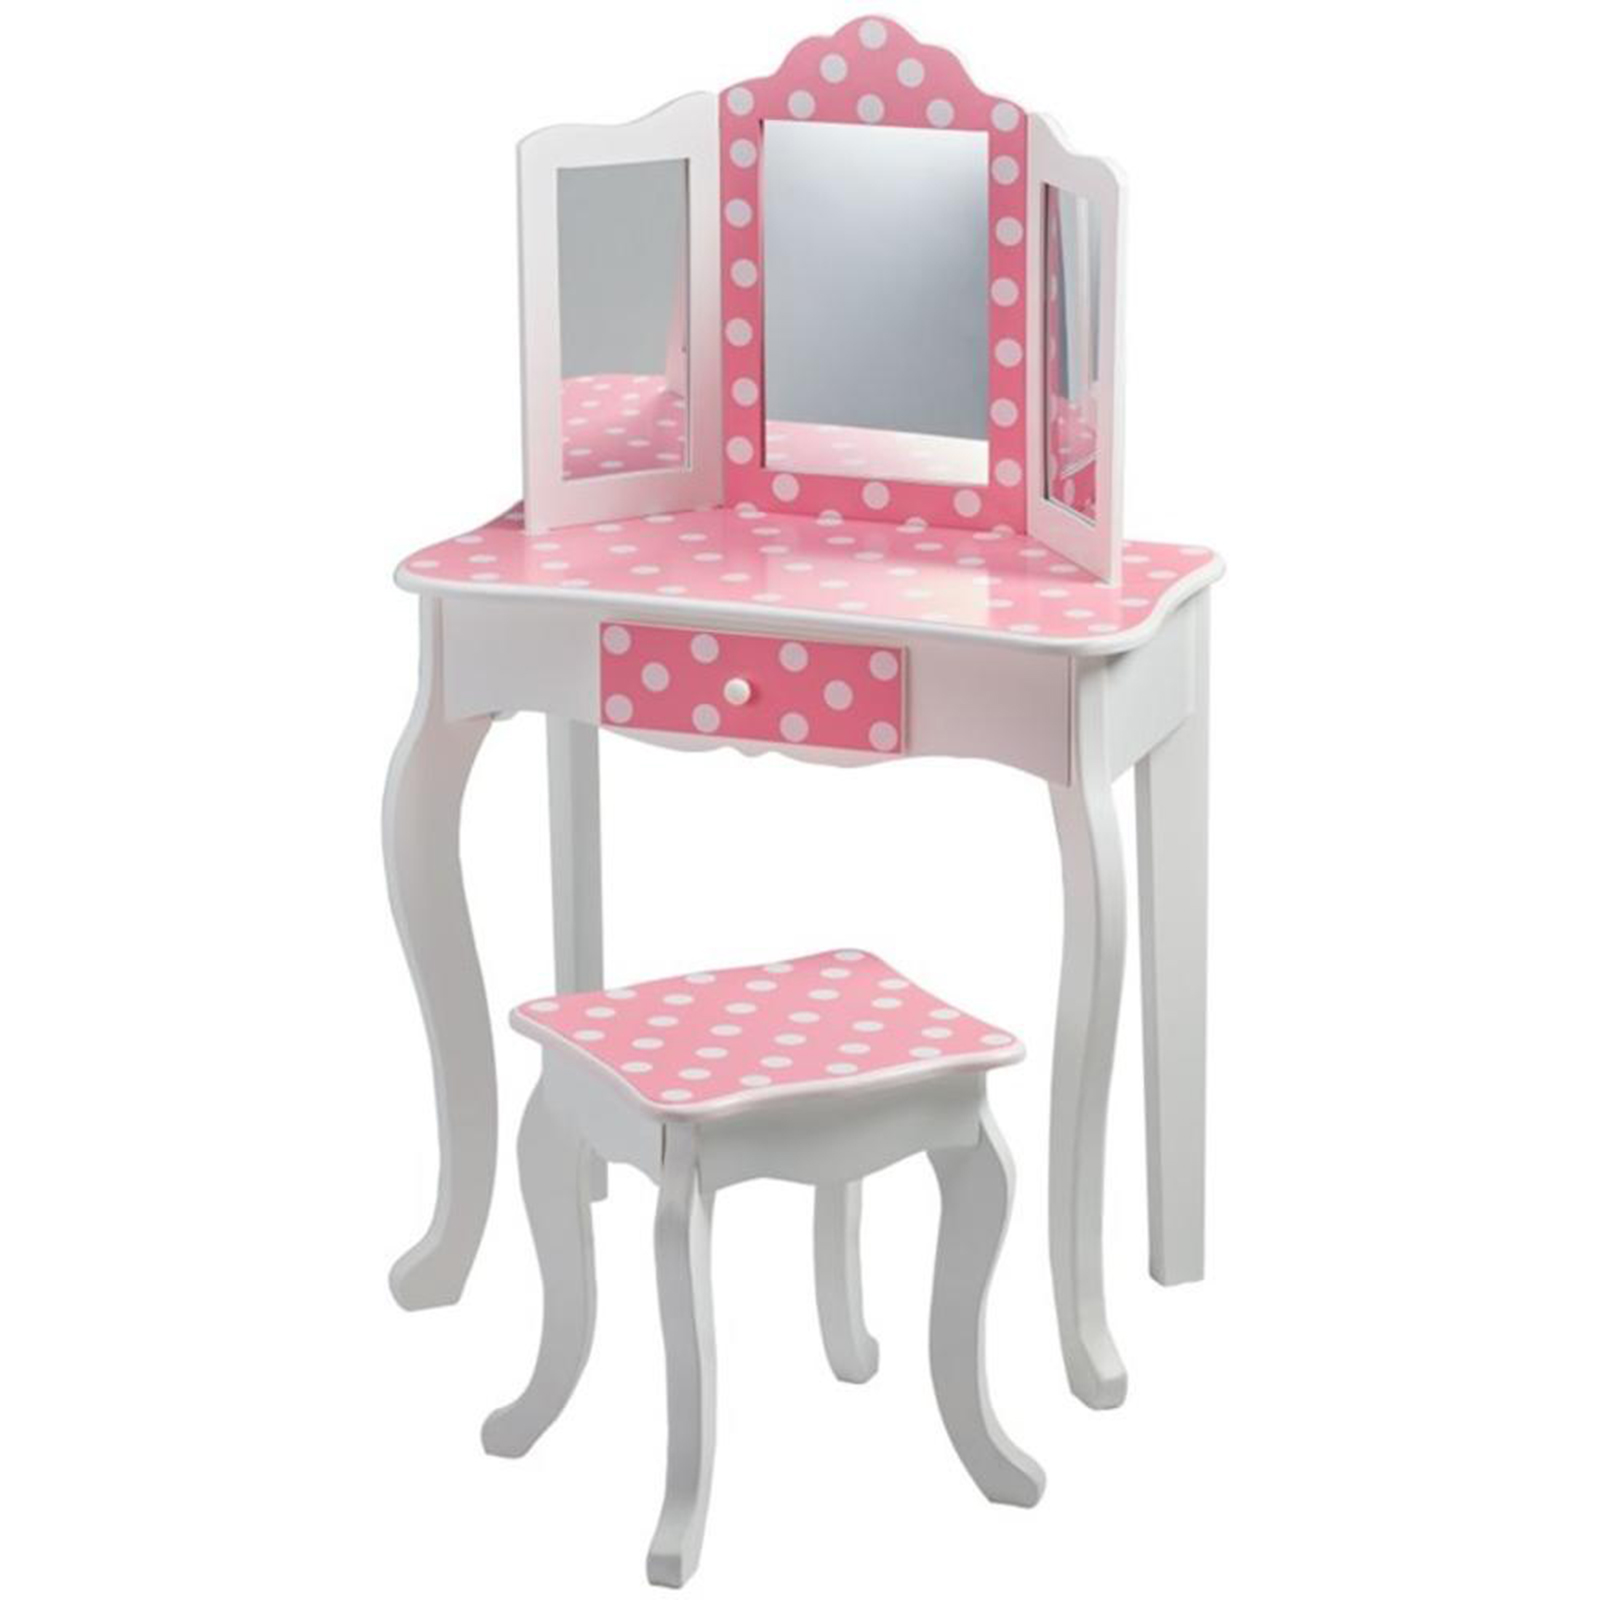 Teamson Design Fashion Prints 38" Polka Dot Kids Vanity Table and Stool Set - Pink and White